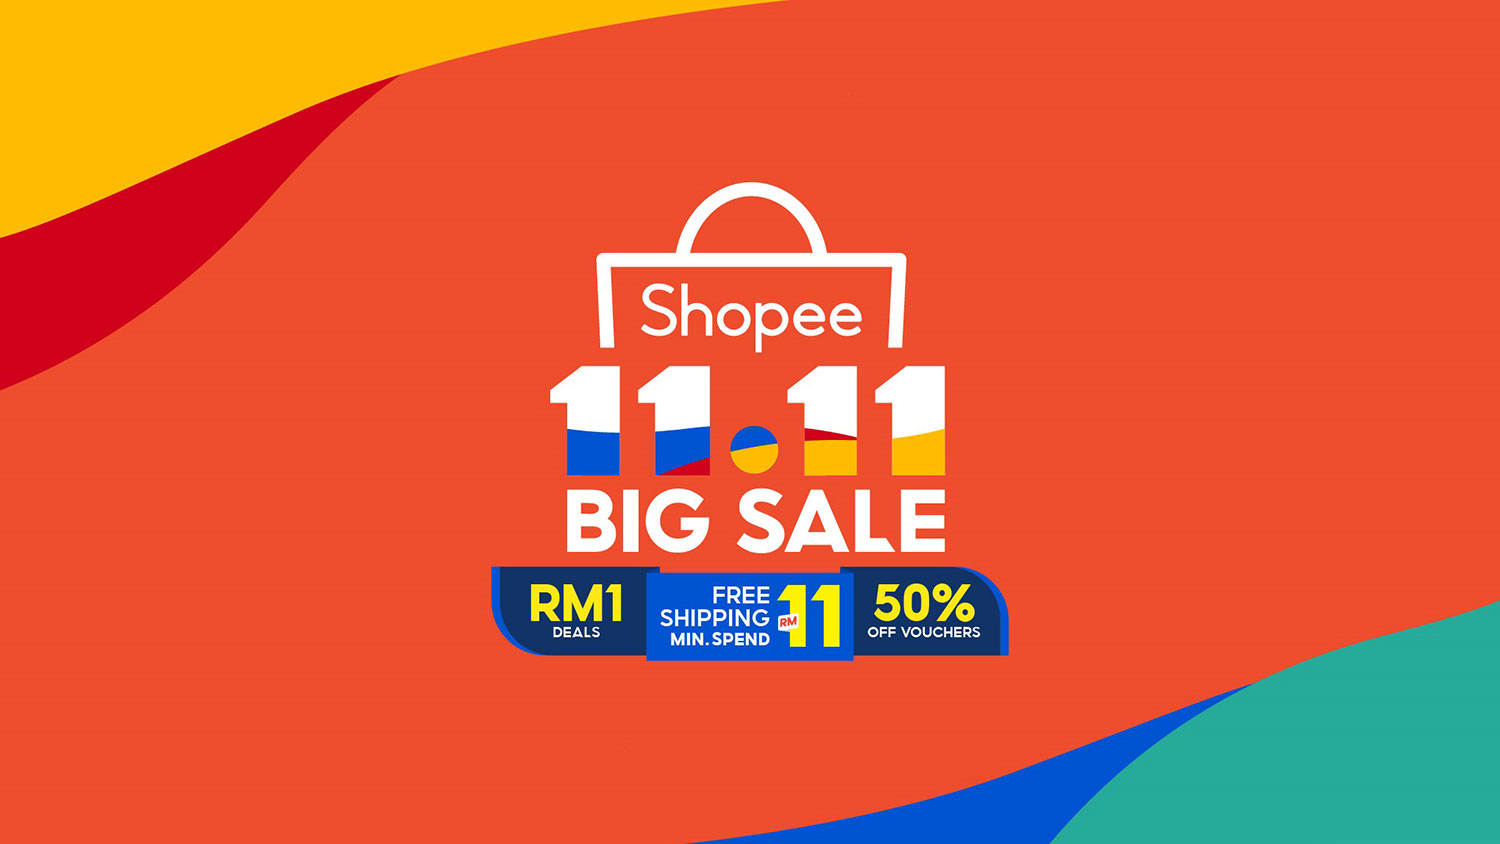 Shopee 11.11 Big Sale 2020